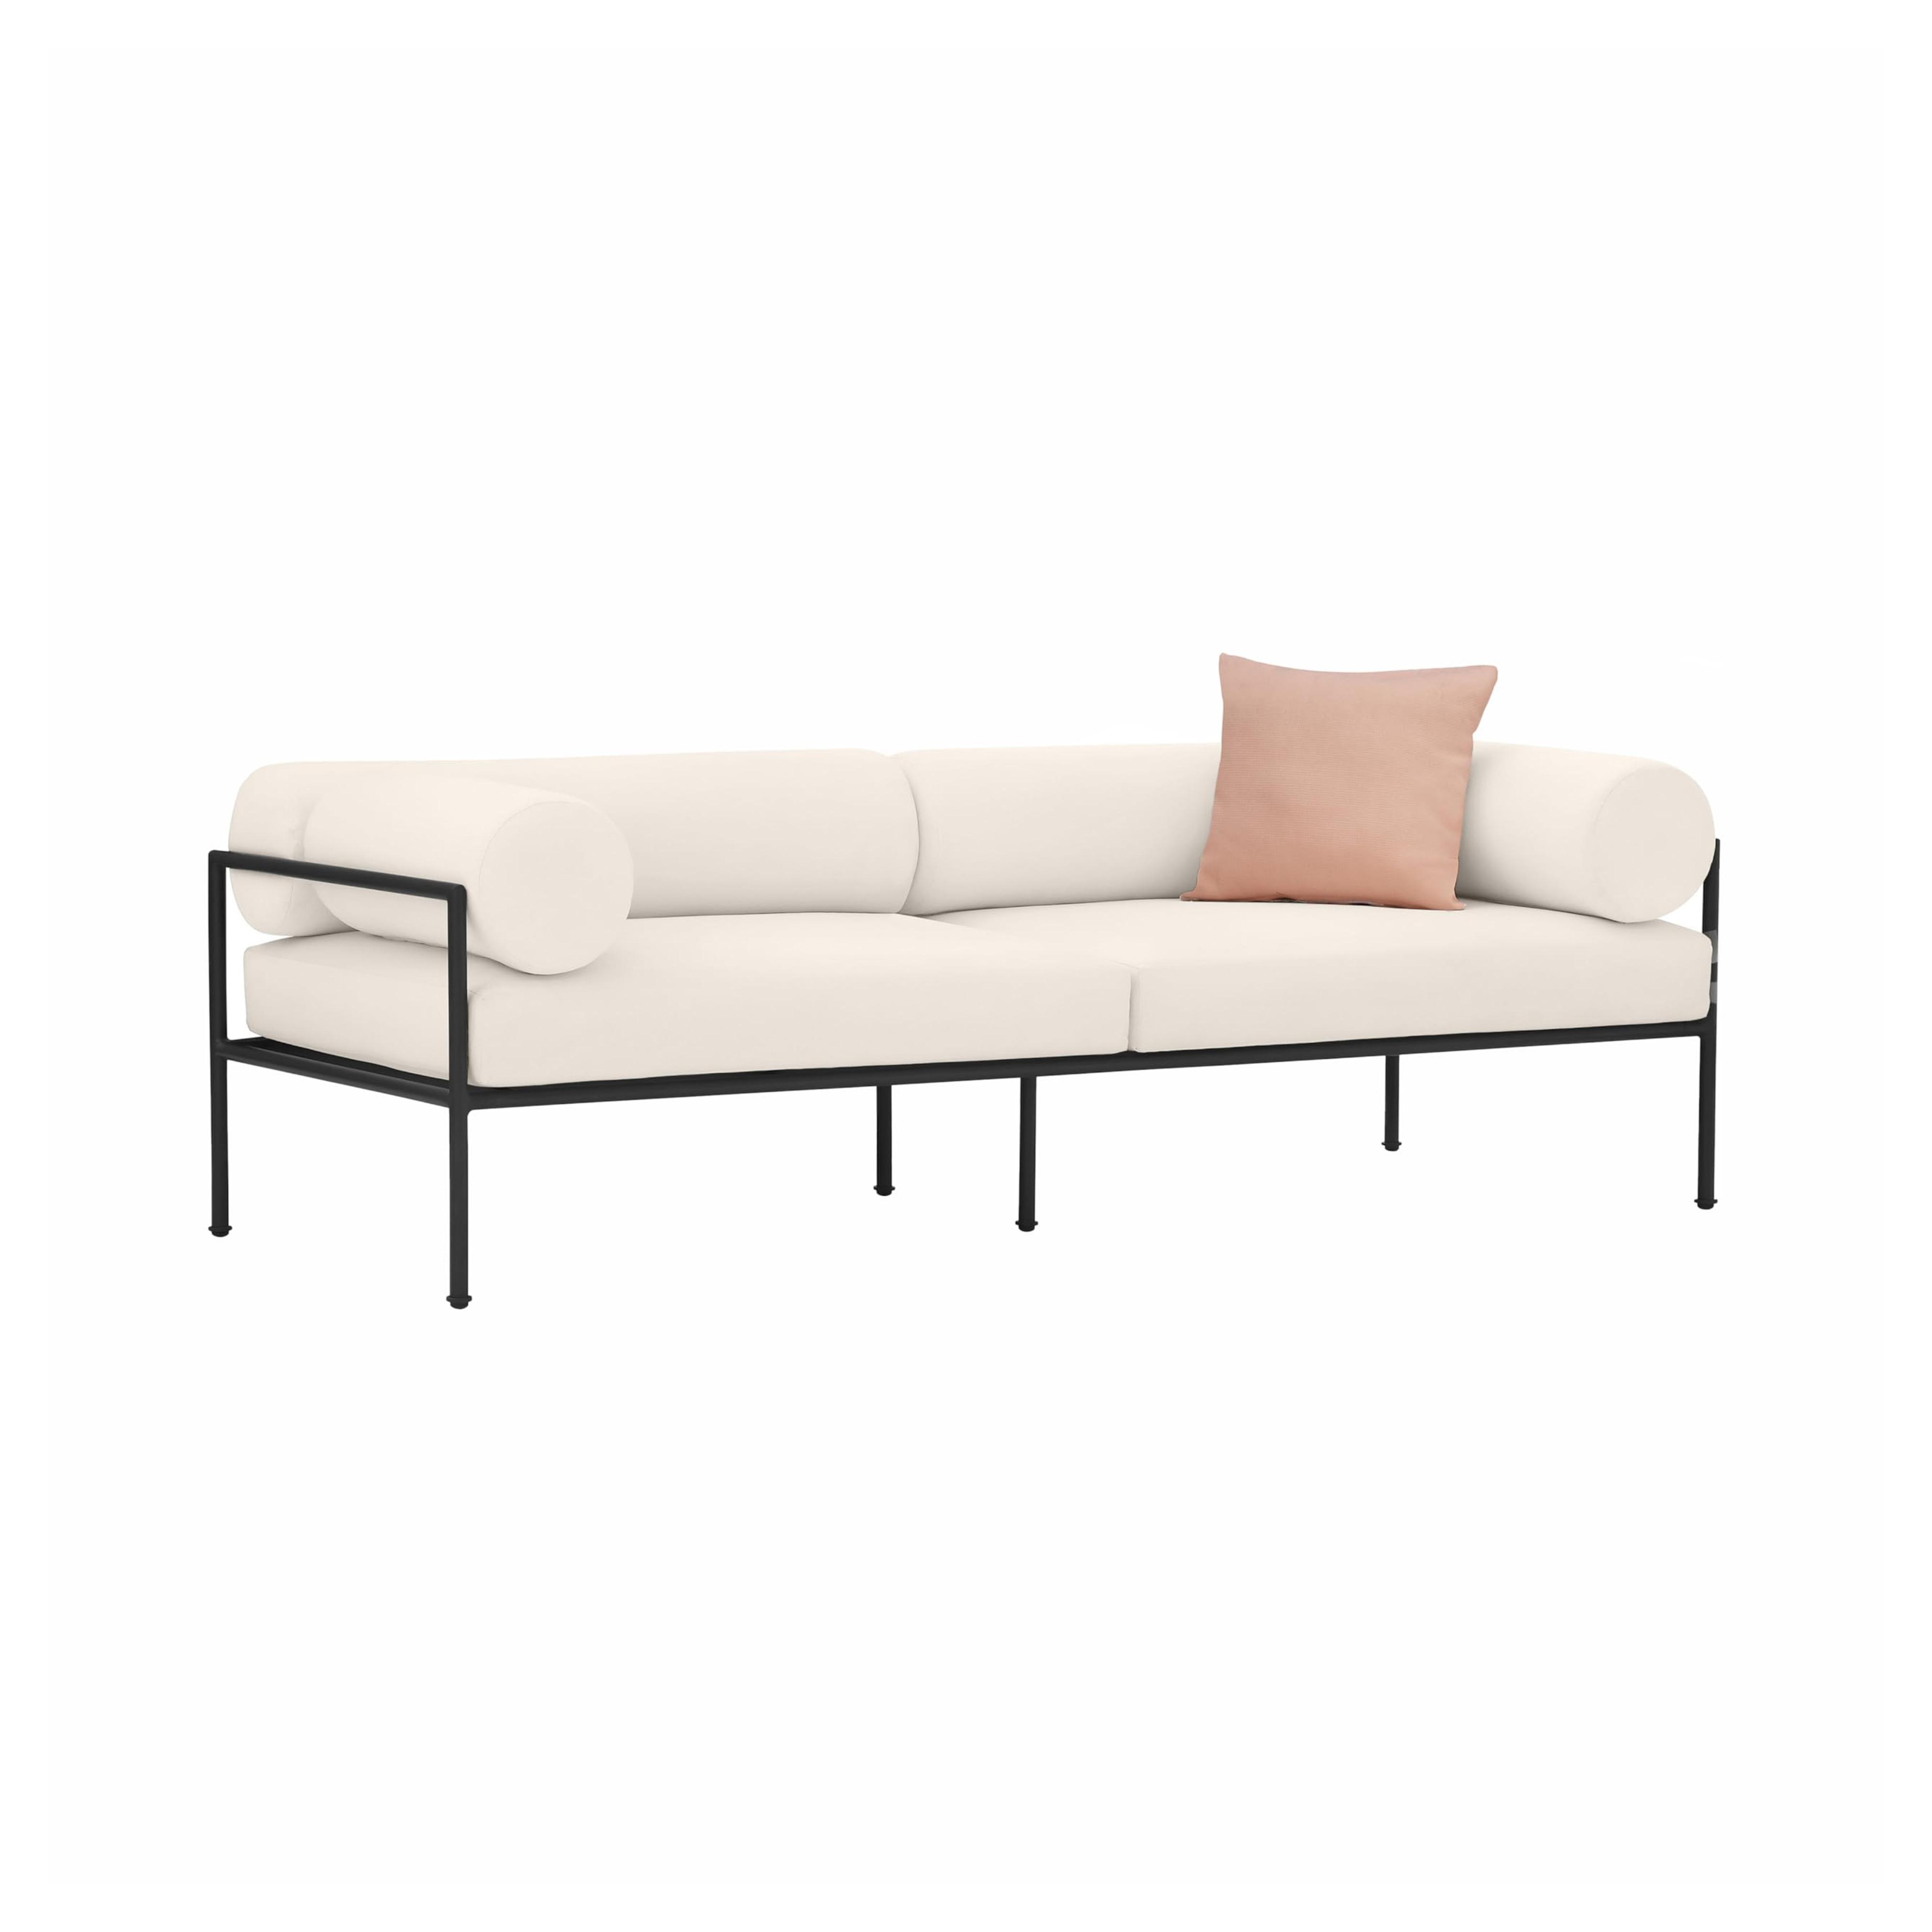 Amazon.com: Tov Furniture Vera Cream Outdoor Sofa : Patio, Lawn & Garden